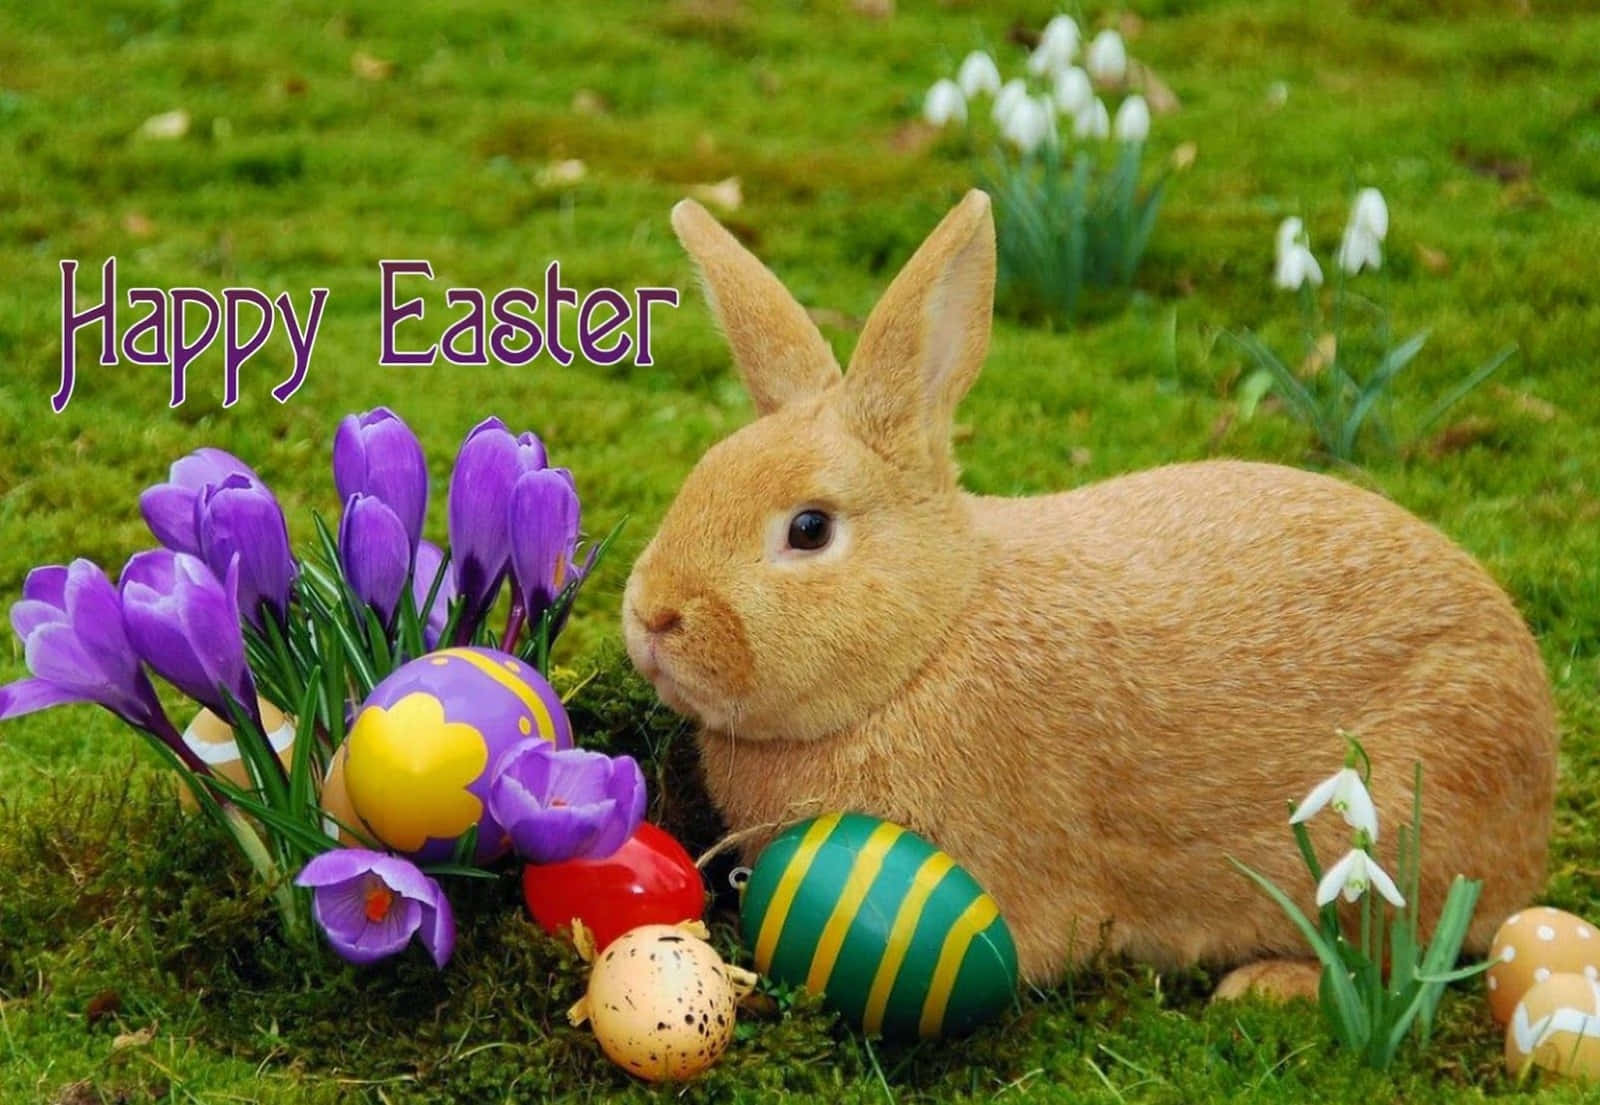 Celebrating the Joy of Easter